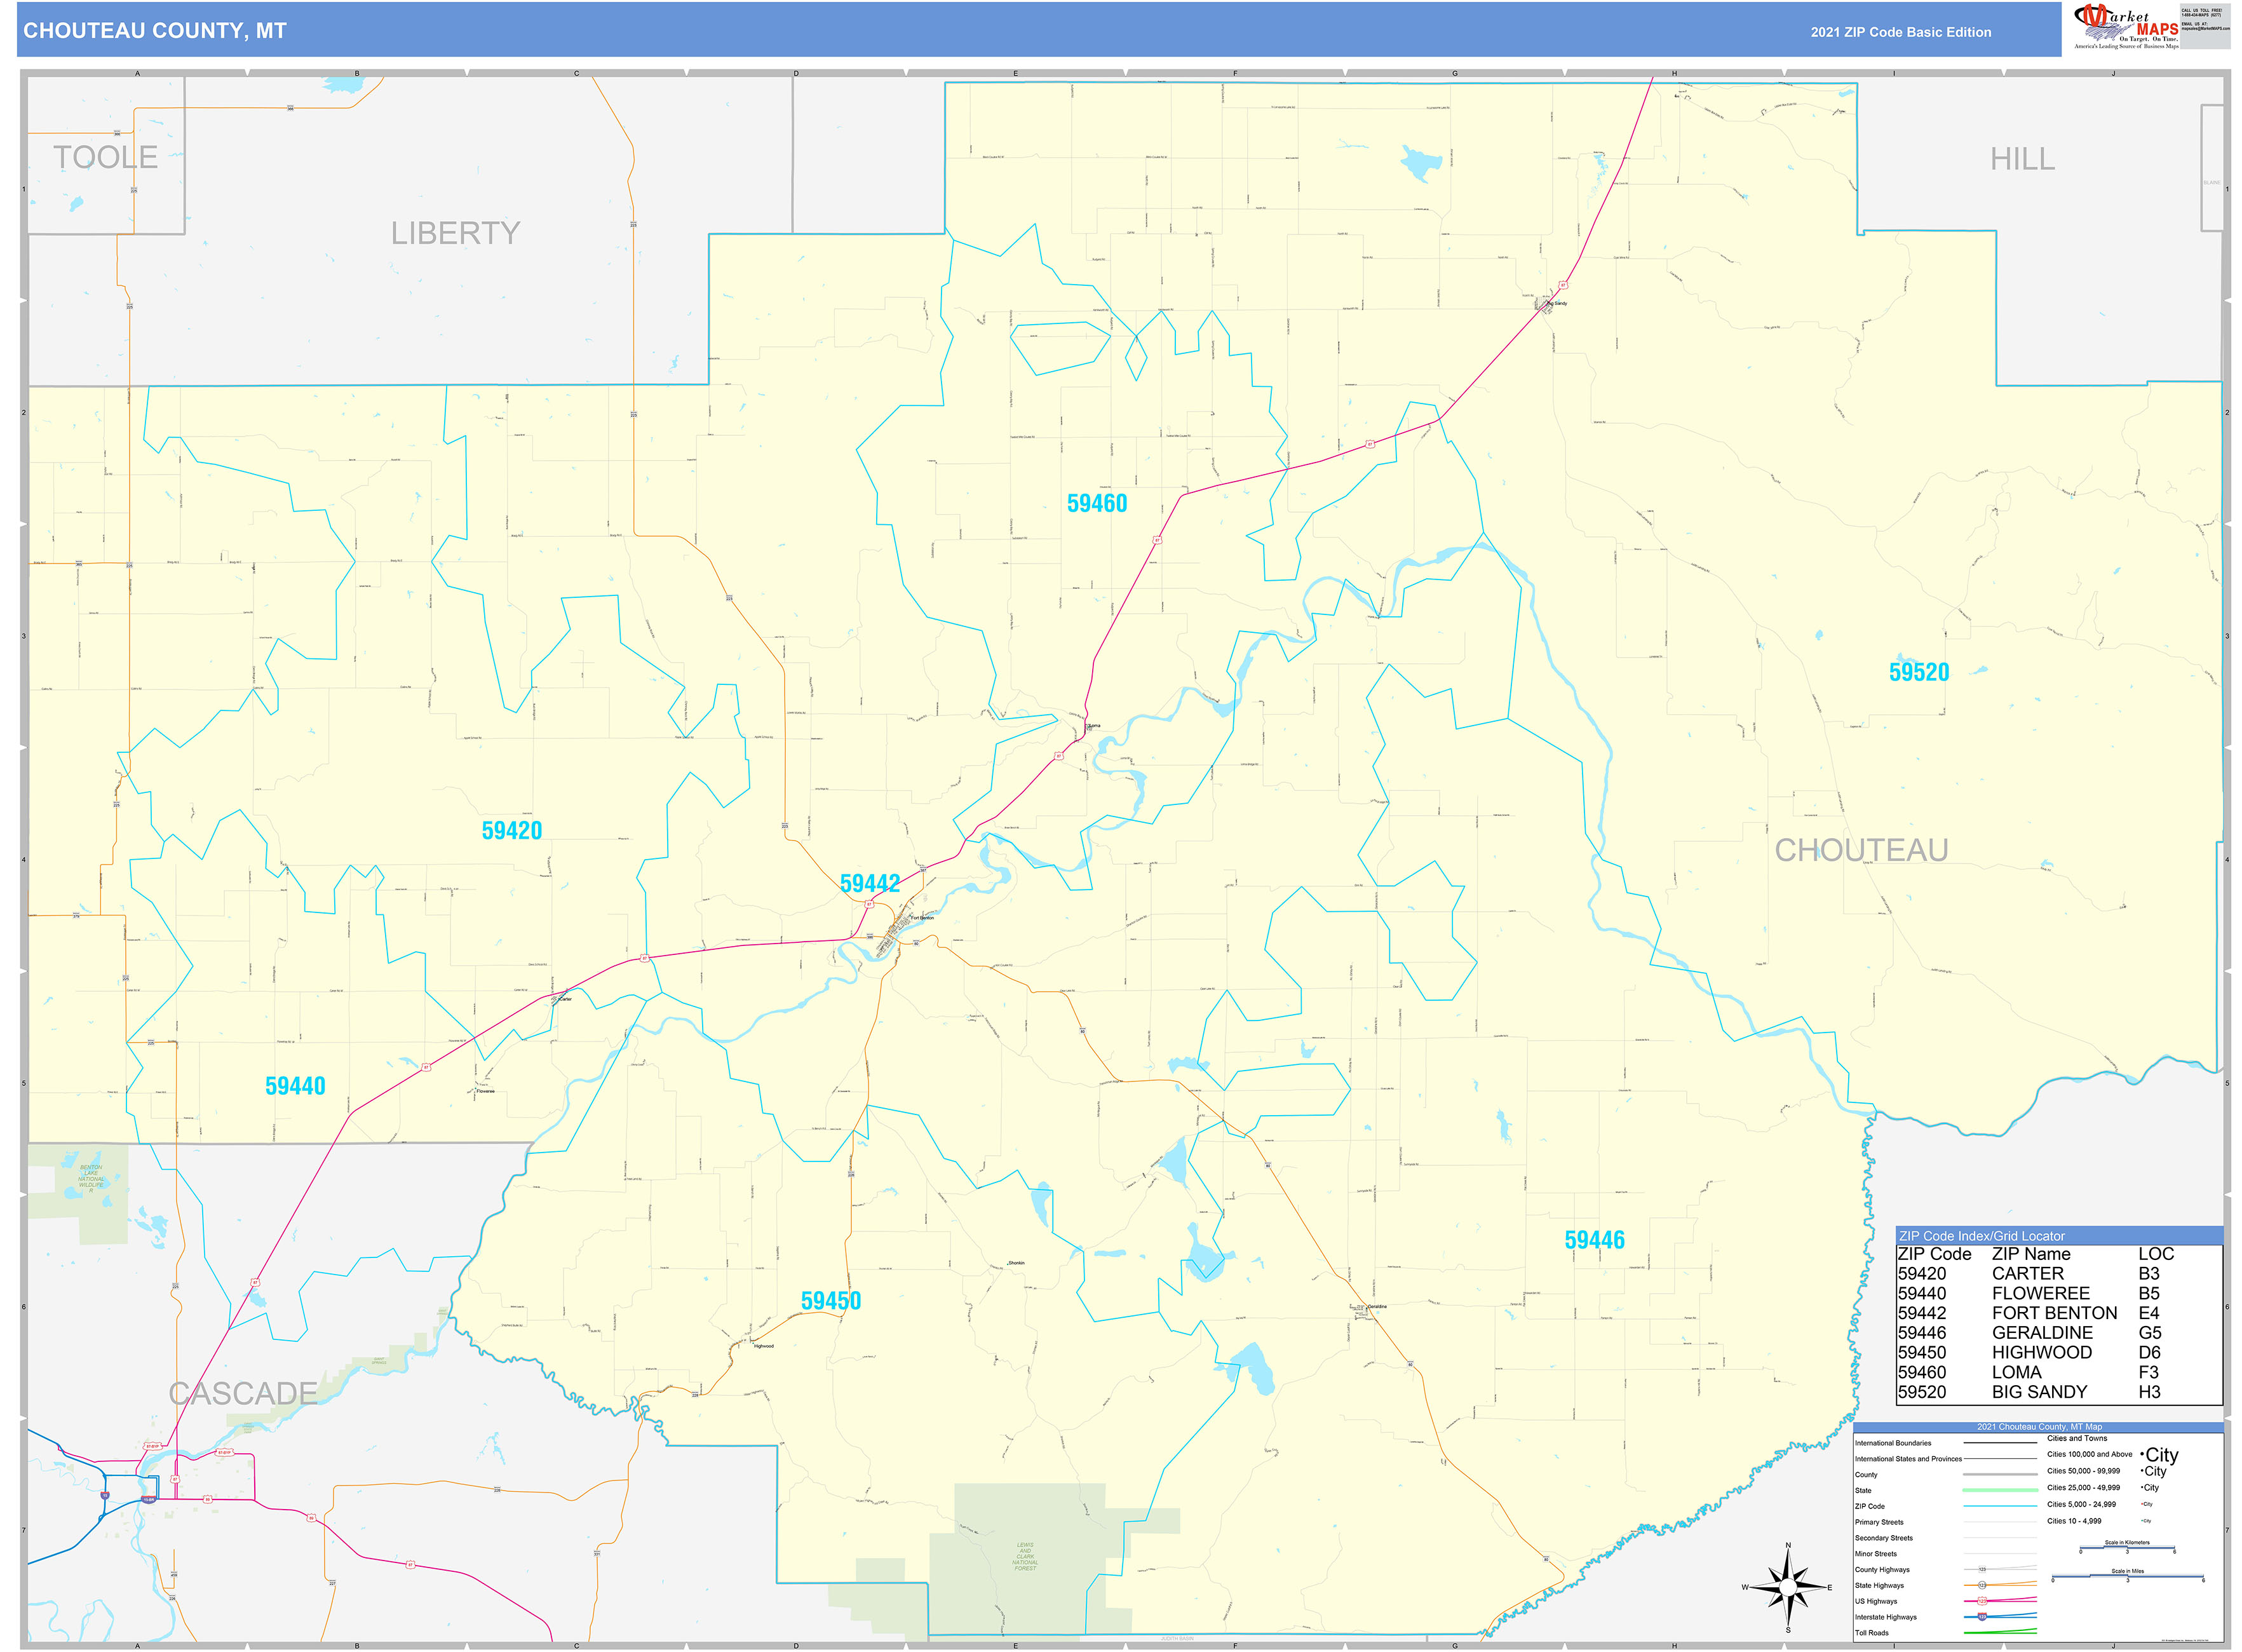 Chouteau County, MT Zip Code Wall Map Basic Style by MarketMAPS